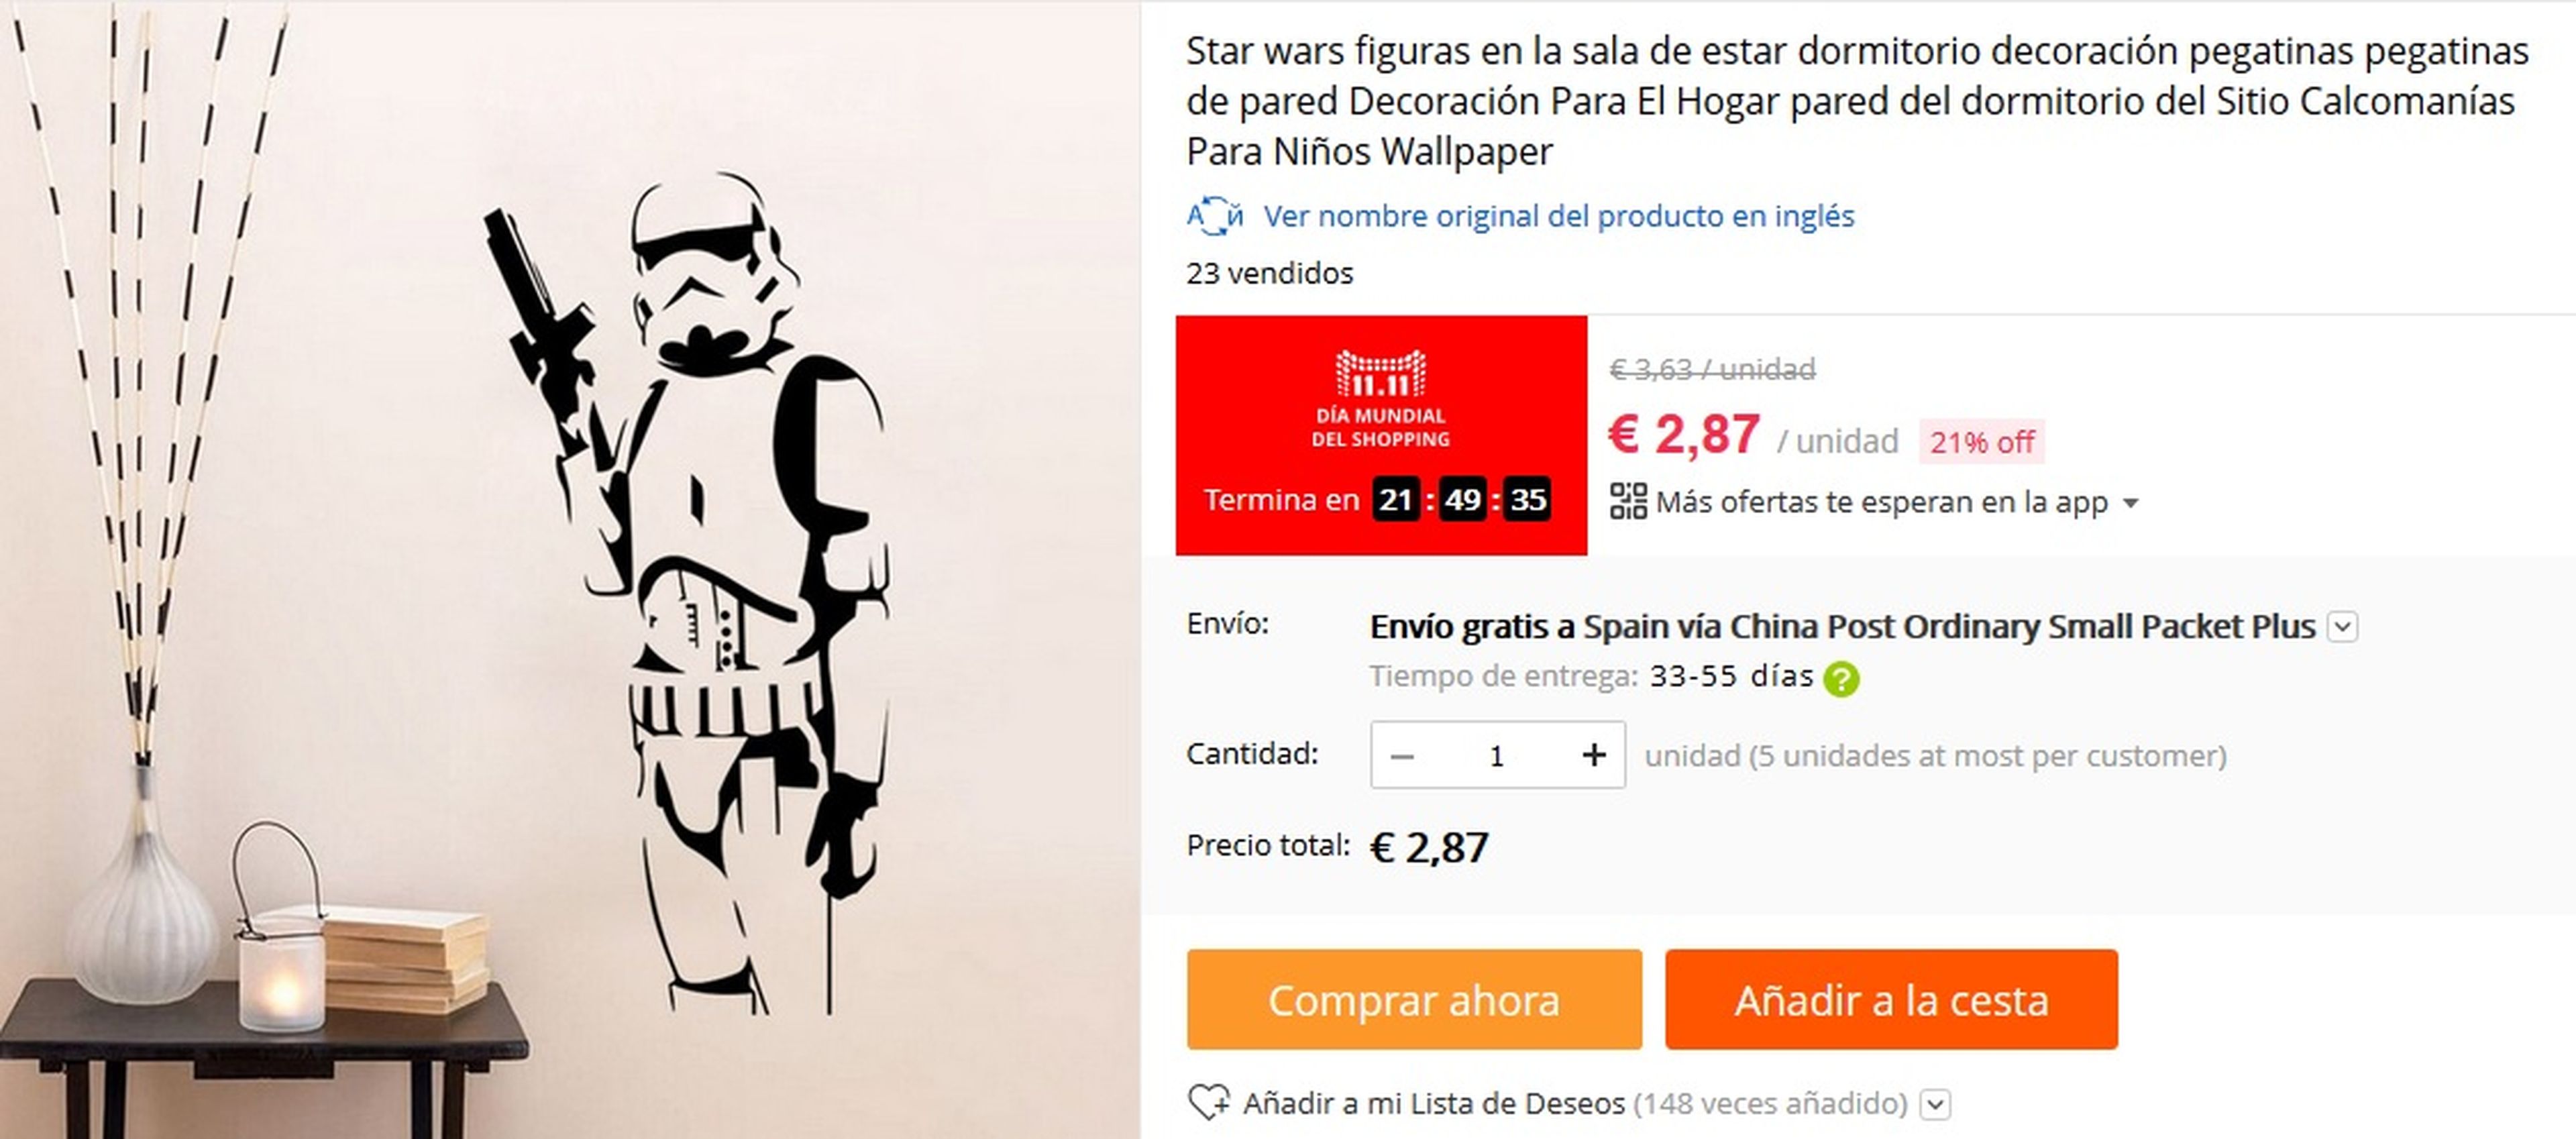 Vinilo Stormtrooper Star Wars por 2,87 €